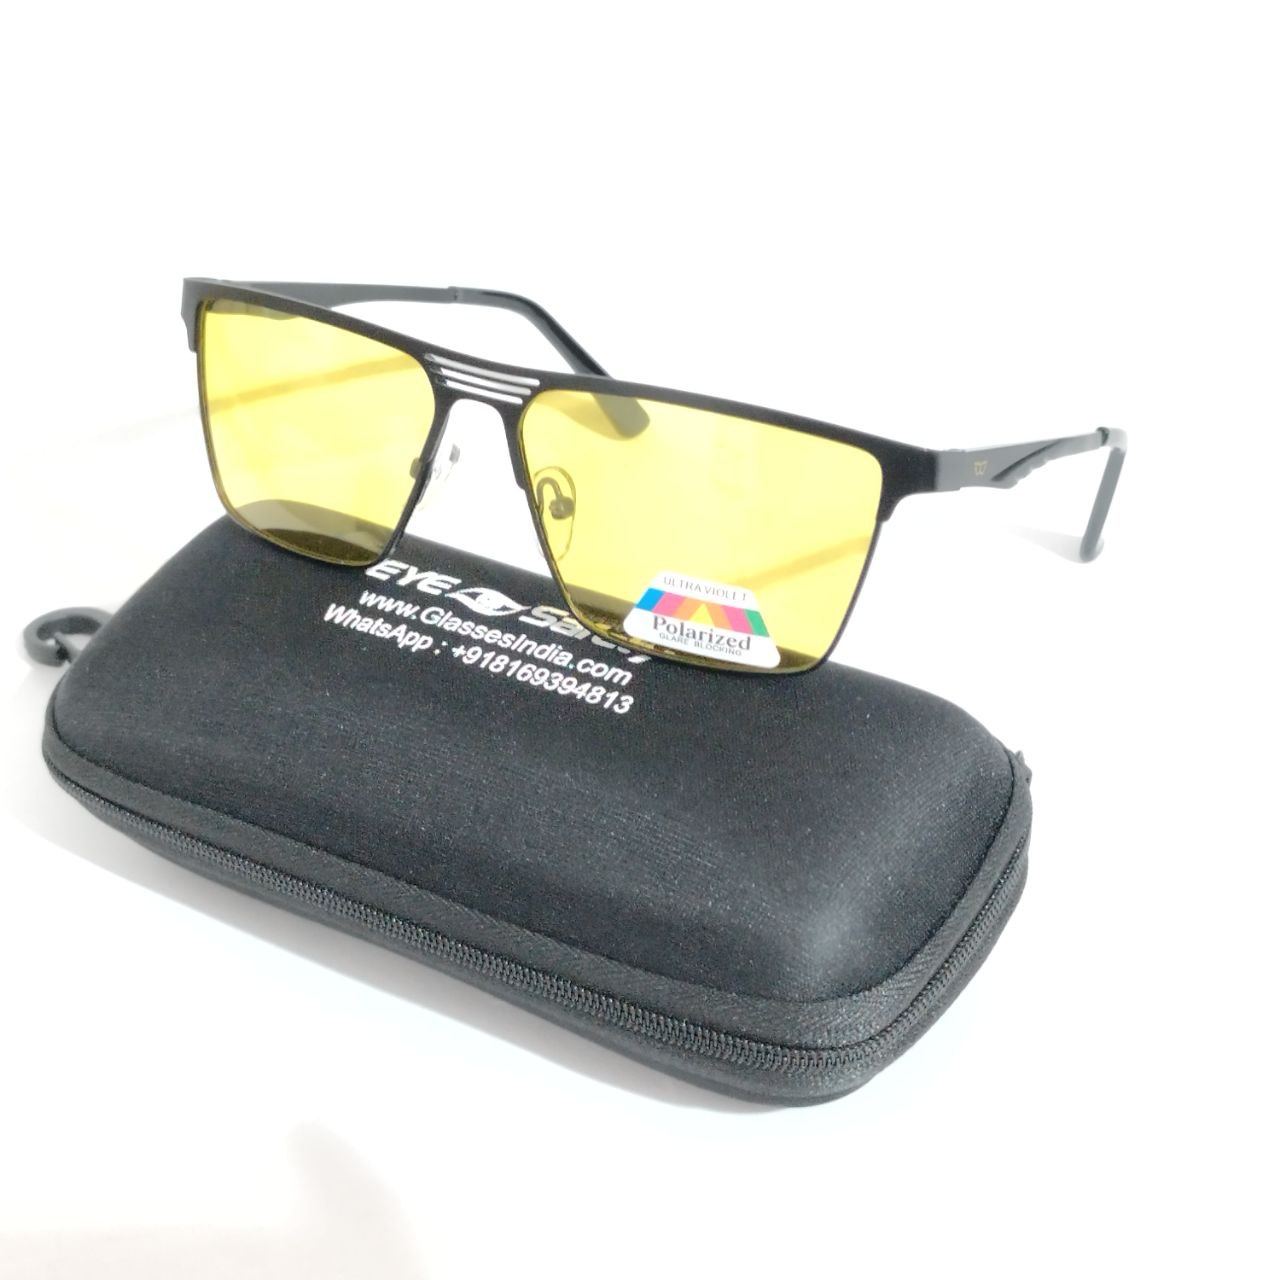 Gleam Guard: Yellow Polarized Sunglasses for Optimal Night Vision